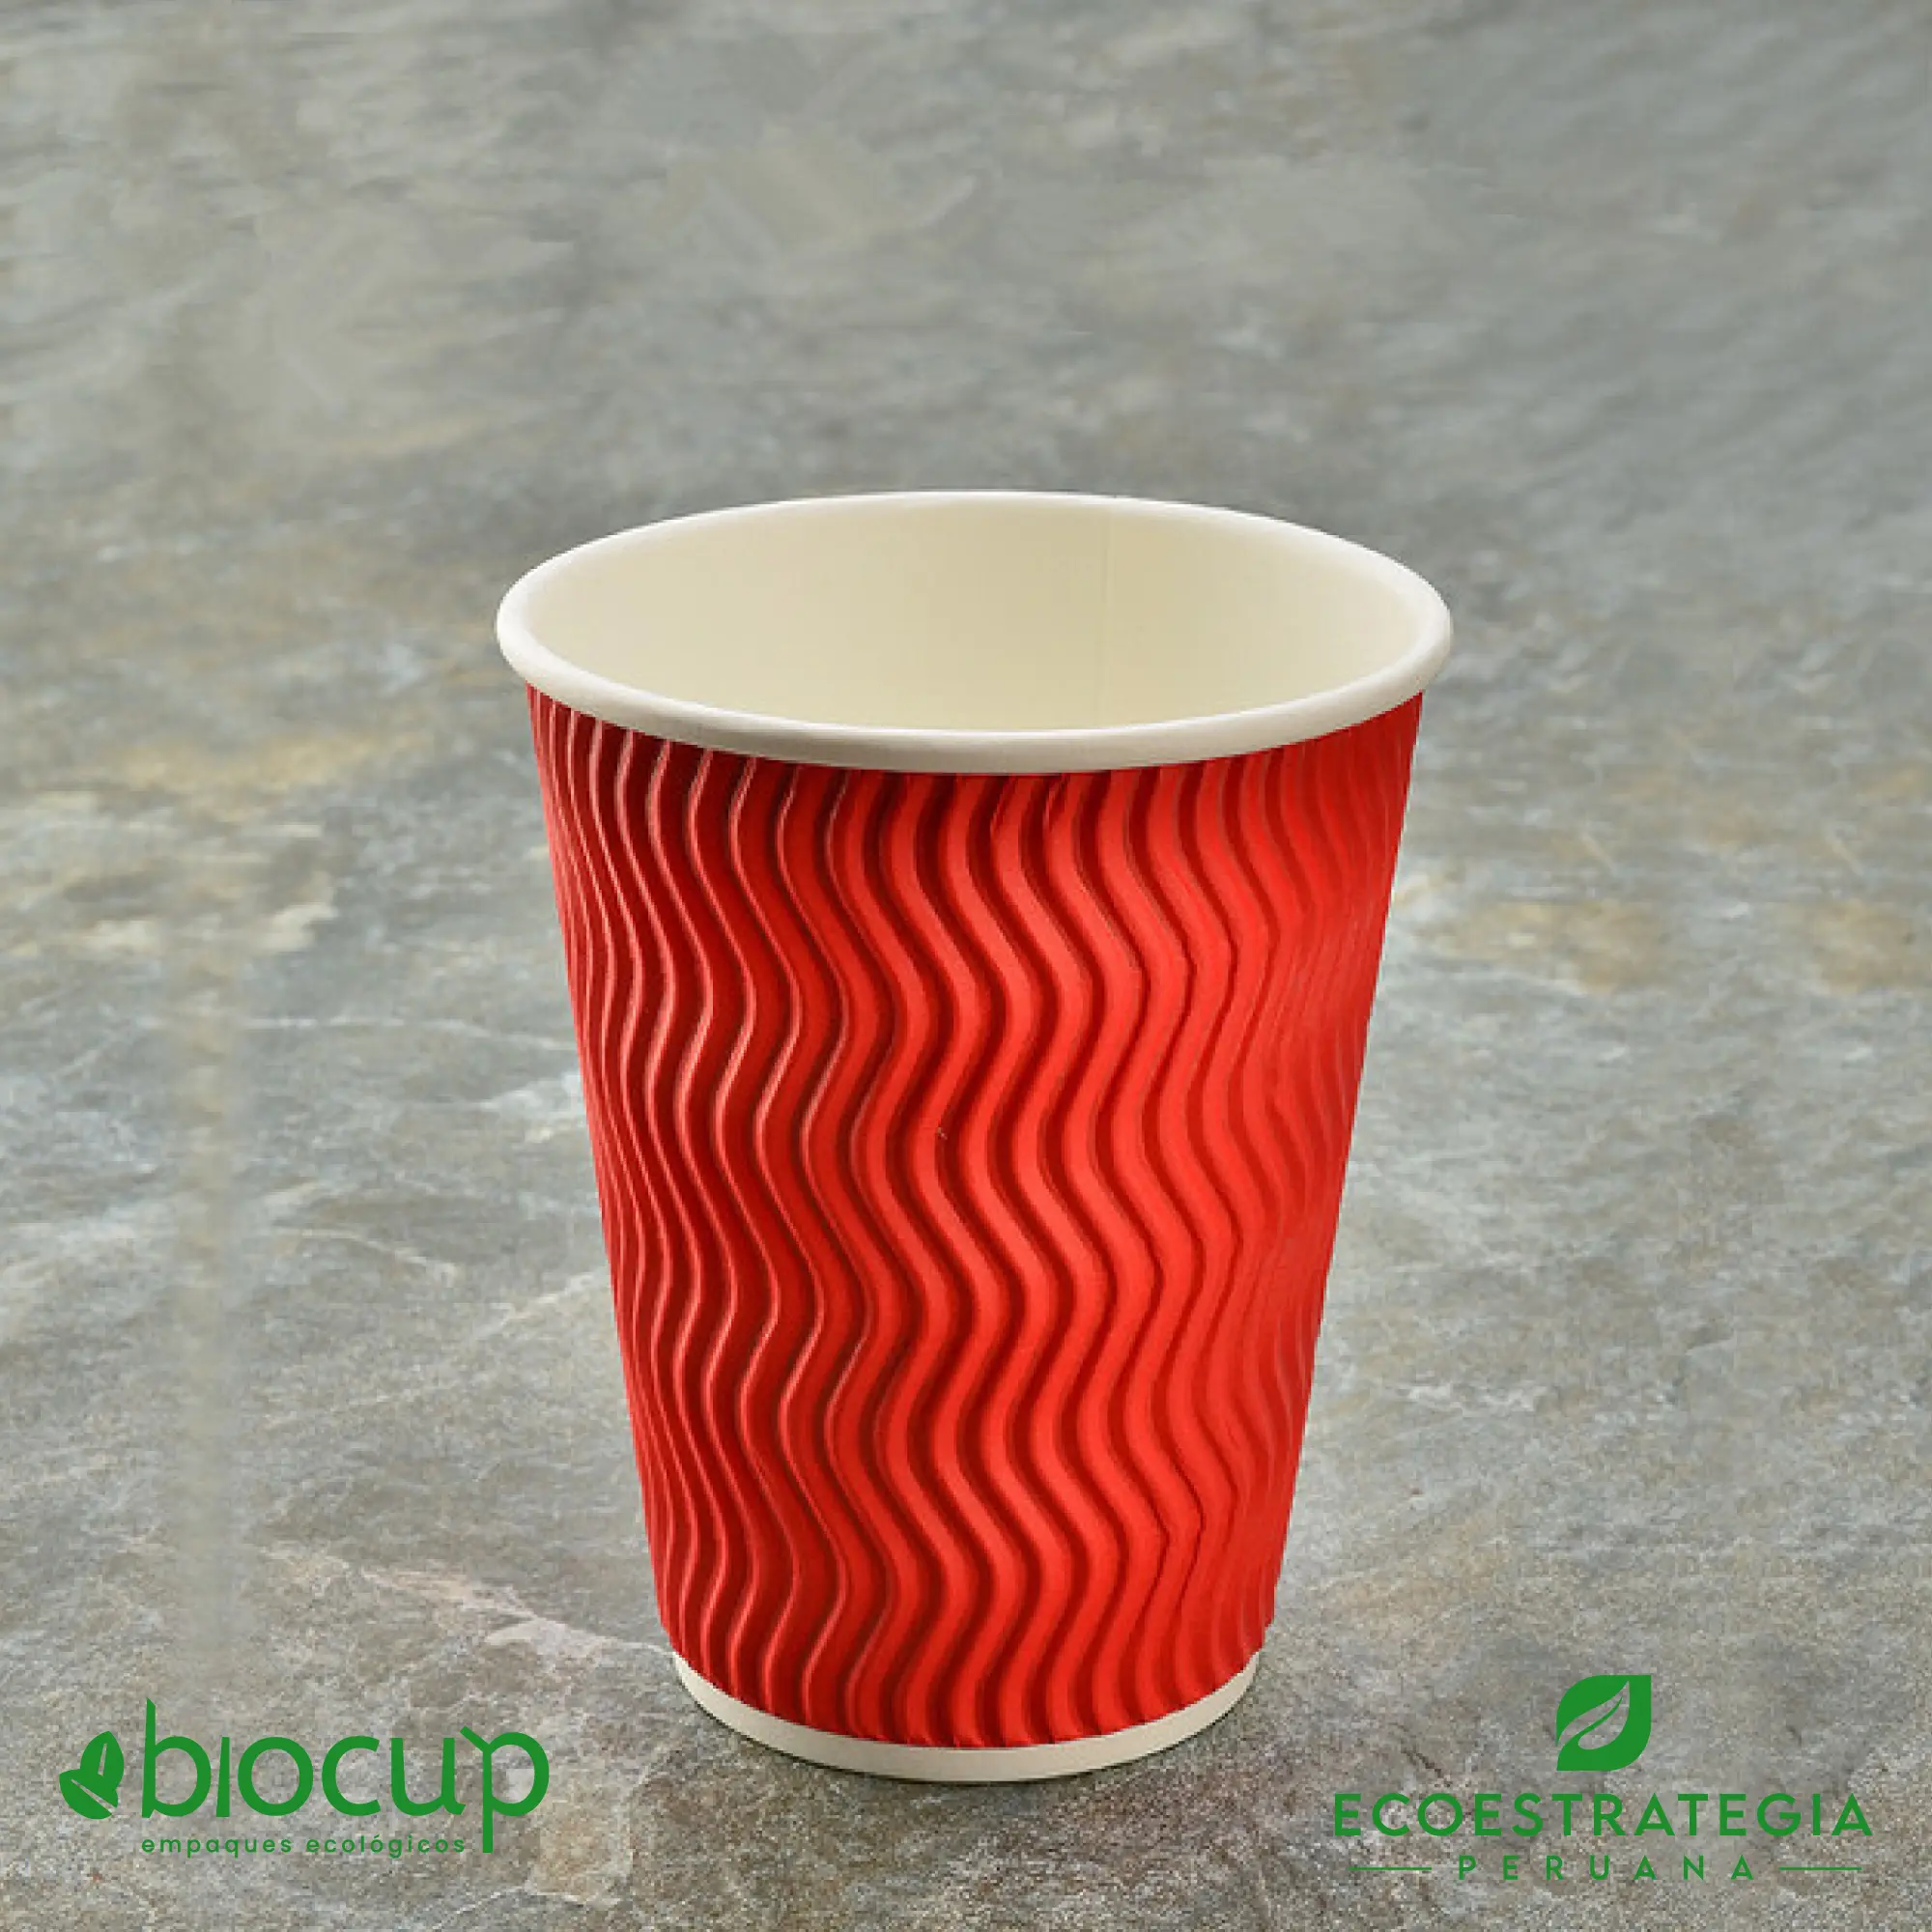 Este vaso de 8 oz con tapa hermética, es un producto de material descartable, hecho a base de polipapel corrugado. Cotiza vasos para bebidas frías o calientes